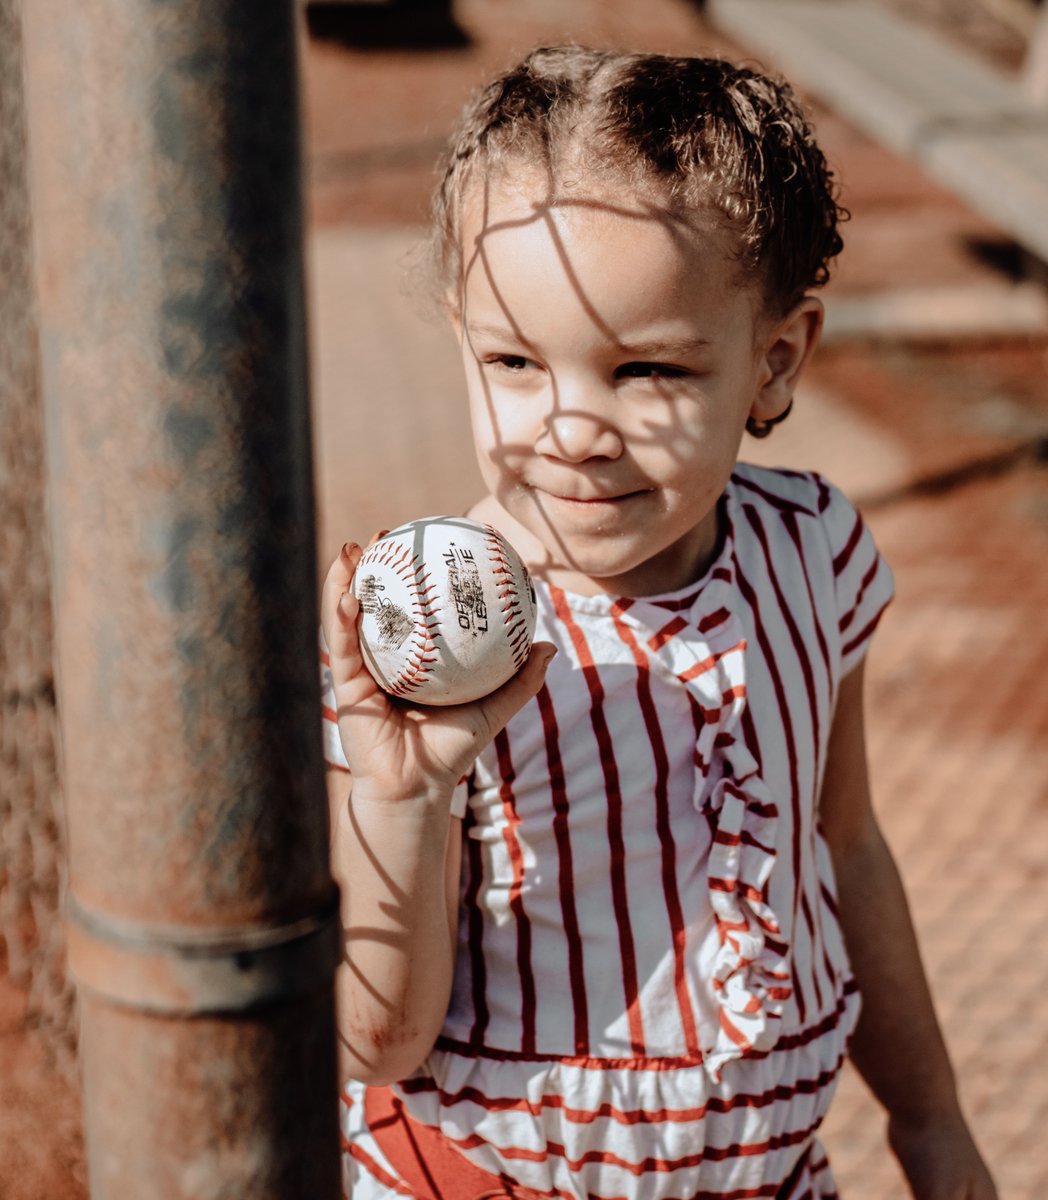 LOVE this ❤️
.
.
.
#photography #photographer #atlantaphotographer #kidsphotography #familyphotography #sisters #baseball #cute #styledphotoshoot #baseballphotoshoot